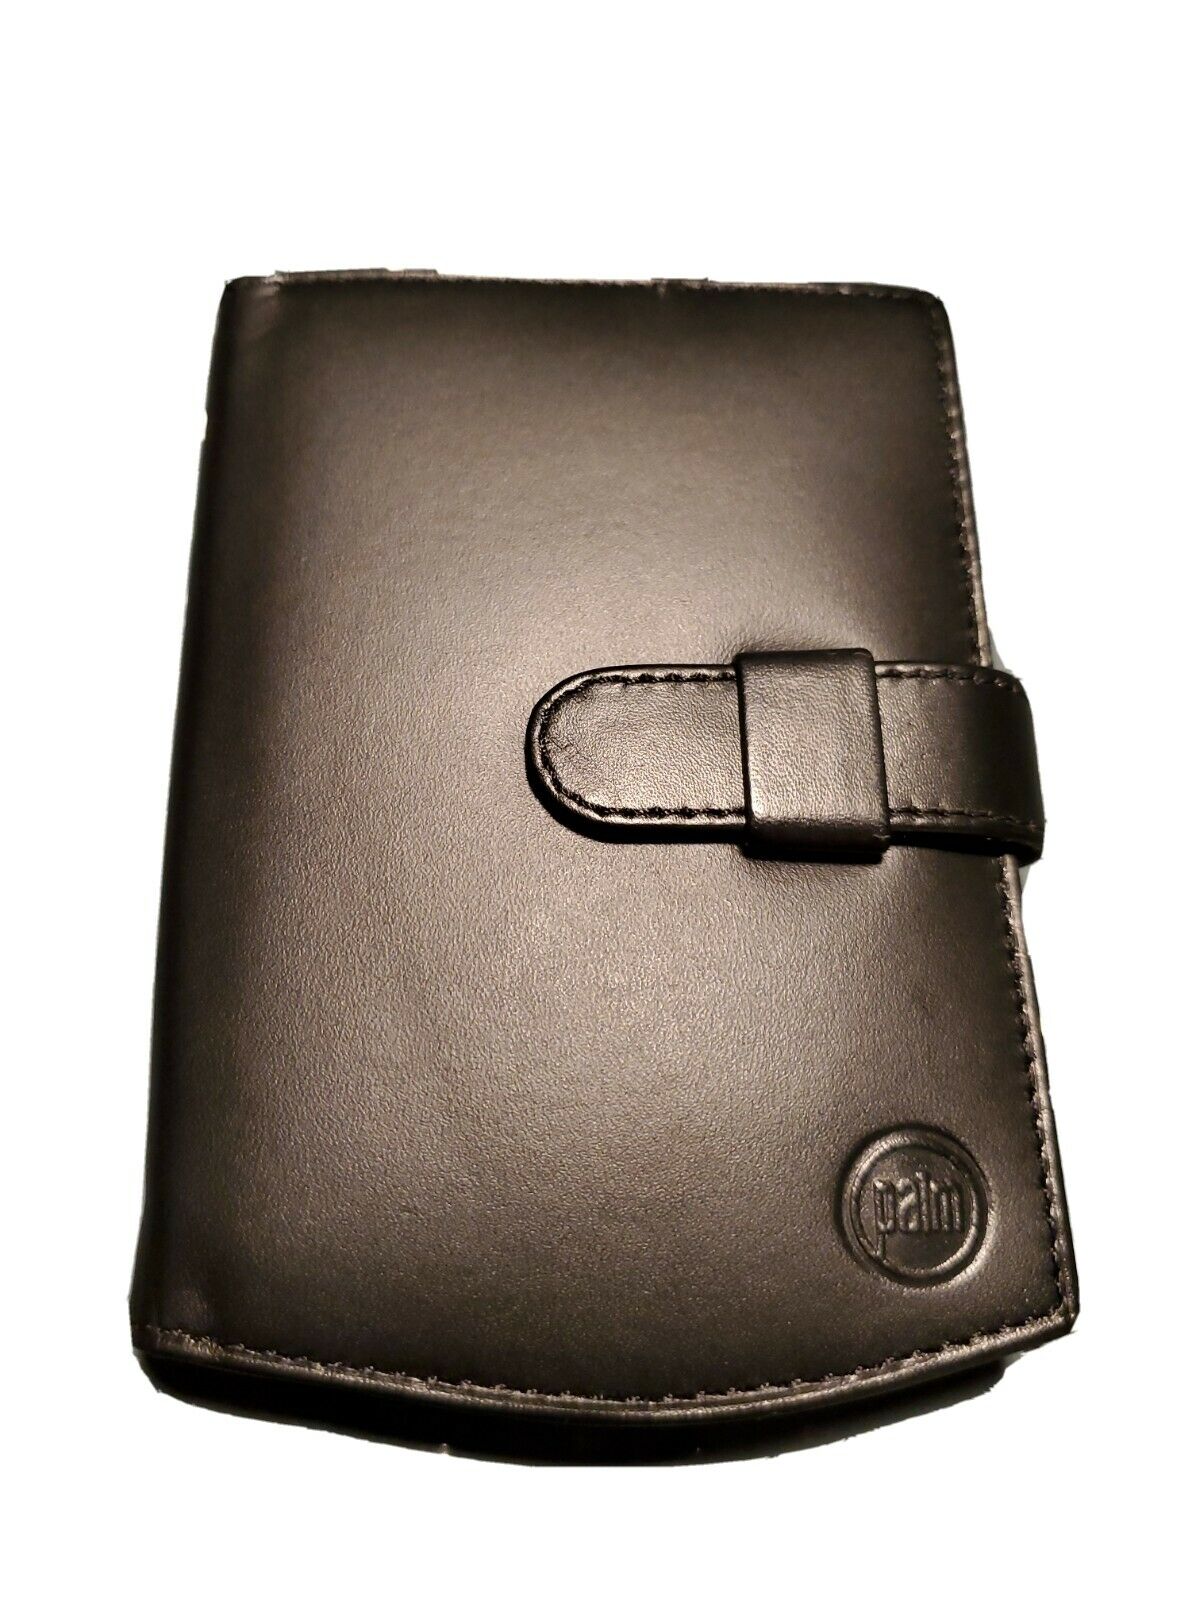 New Genuine Palm Pilot (pda) Leather Case For Palm V, Vx (5, 5x)